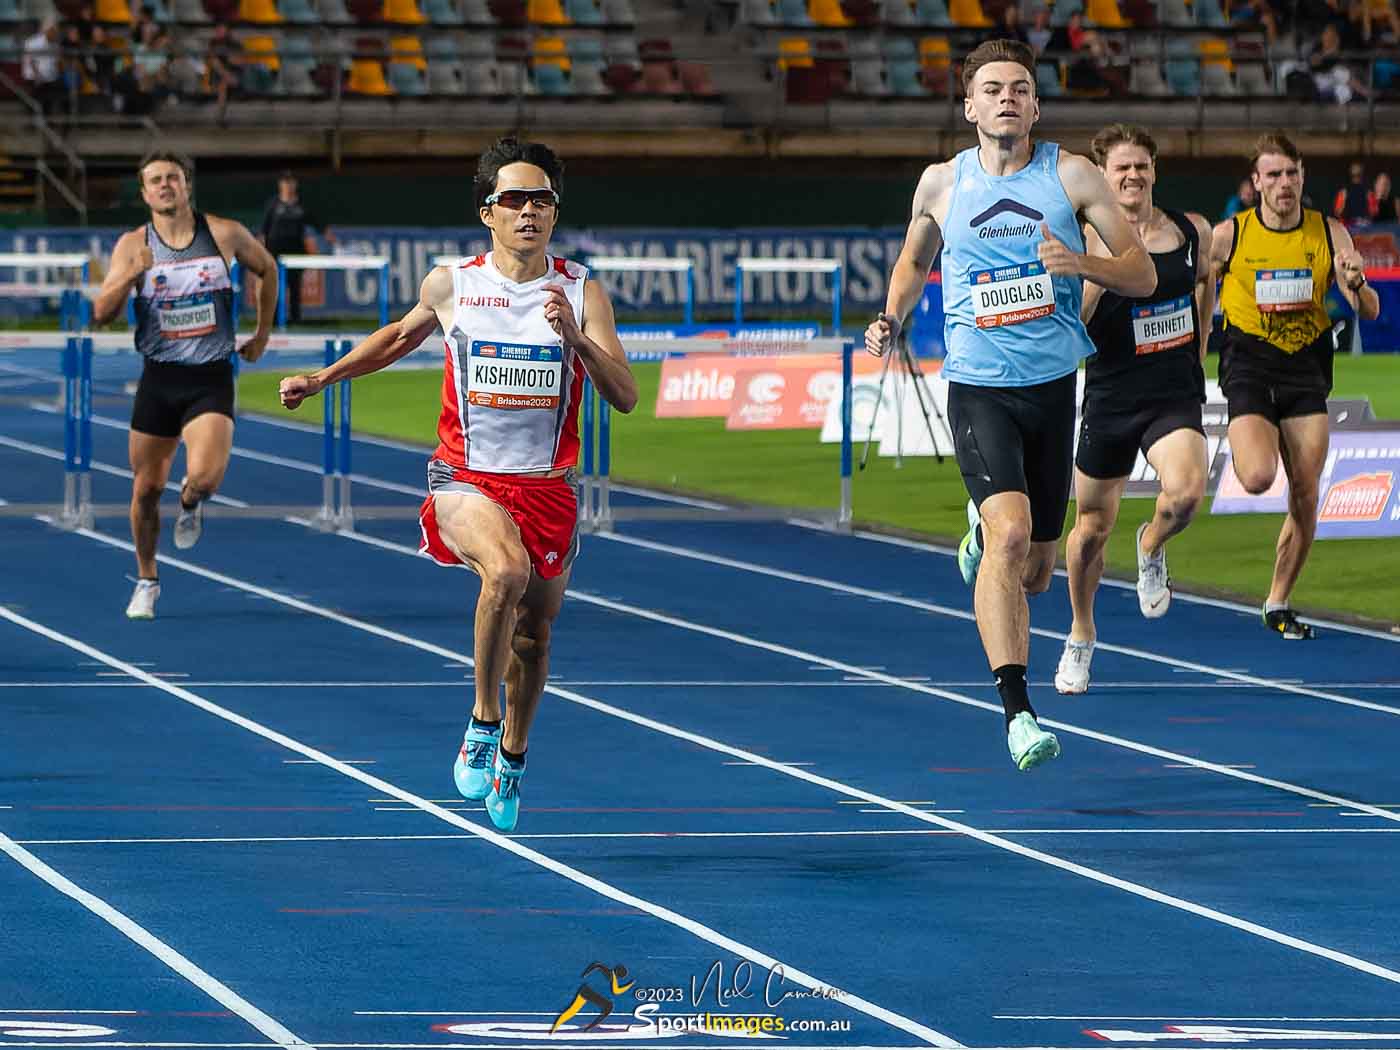 Takayuki Kishimoto, Chris Douglas, Men's 400m Hurdles